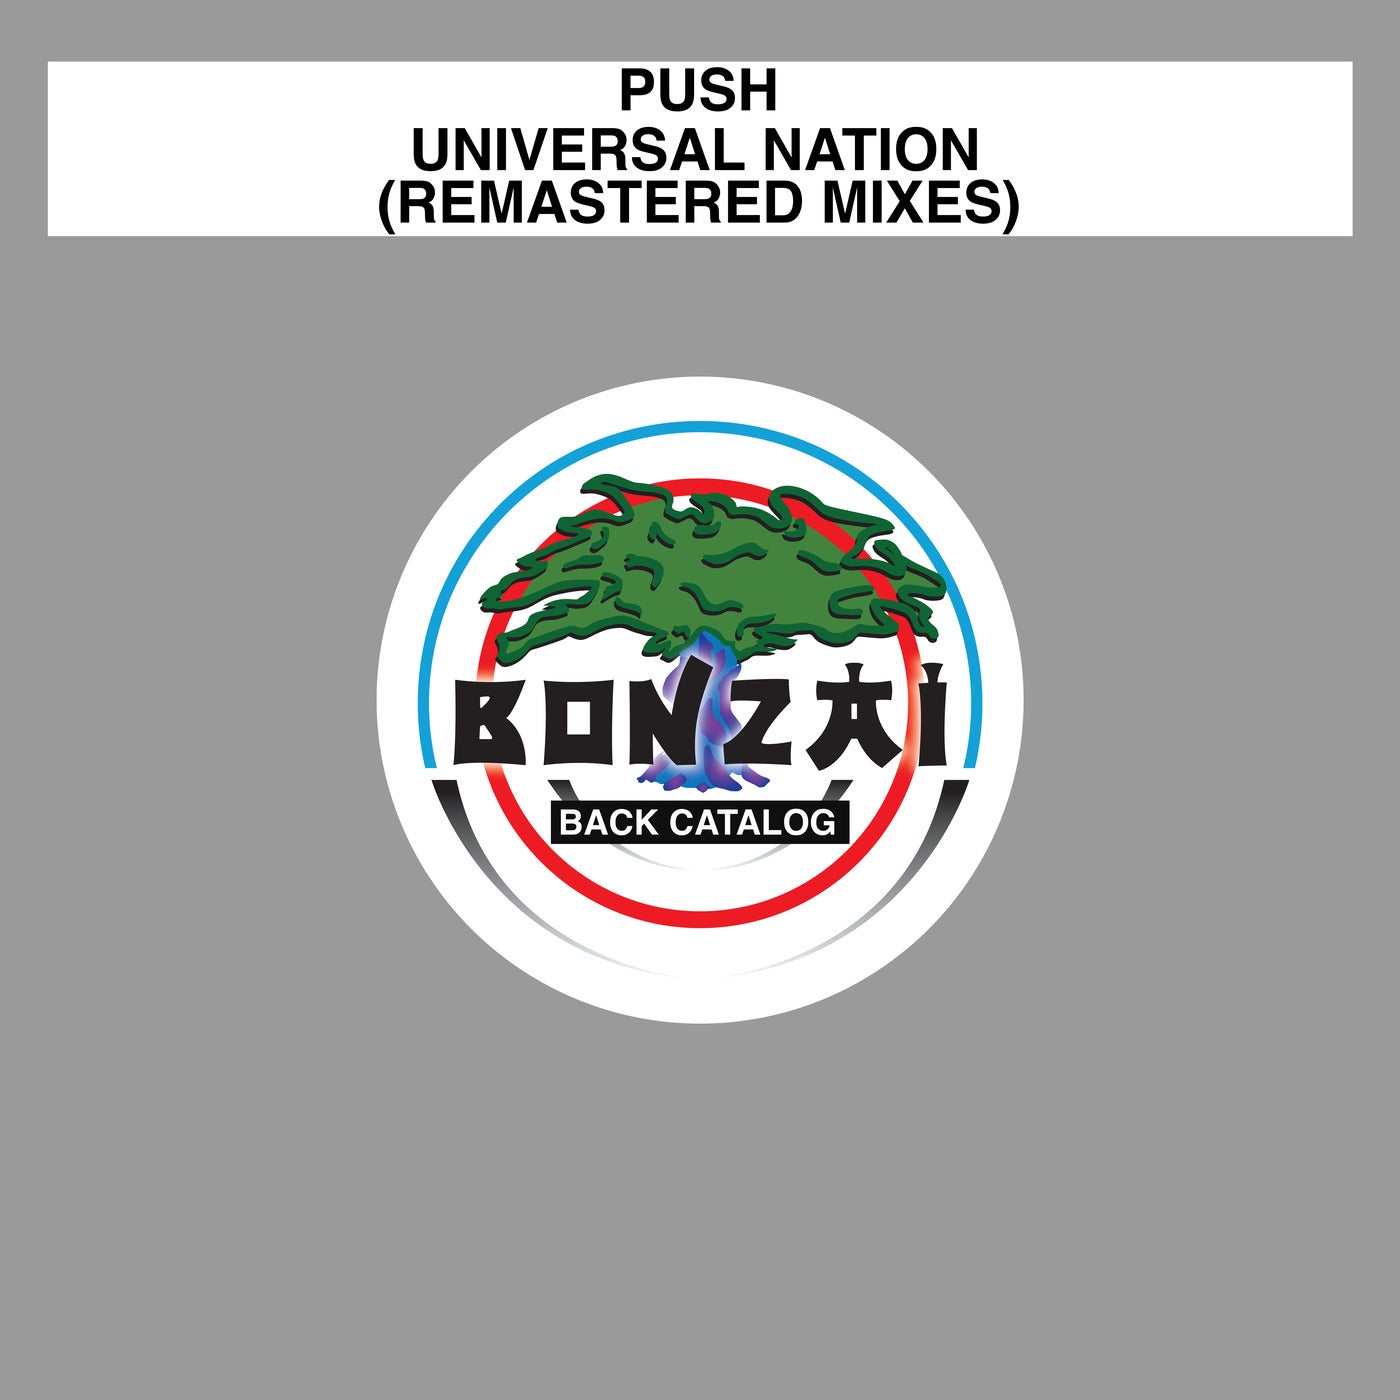 Universal Nation (Remastered Mixes)